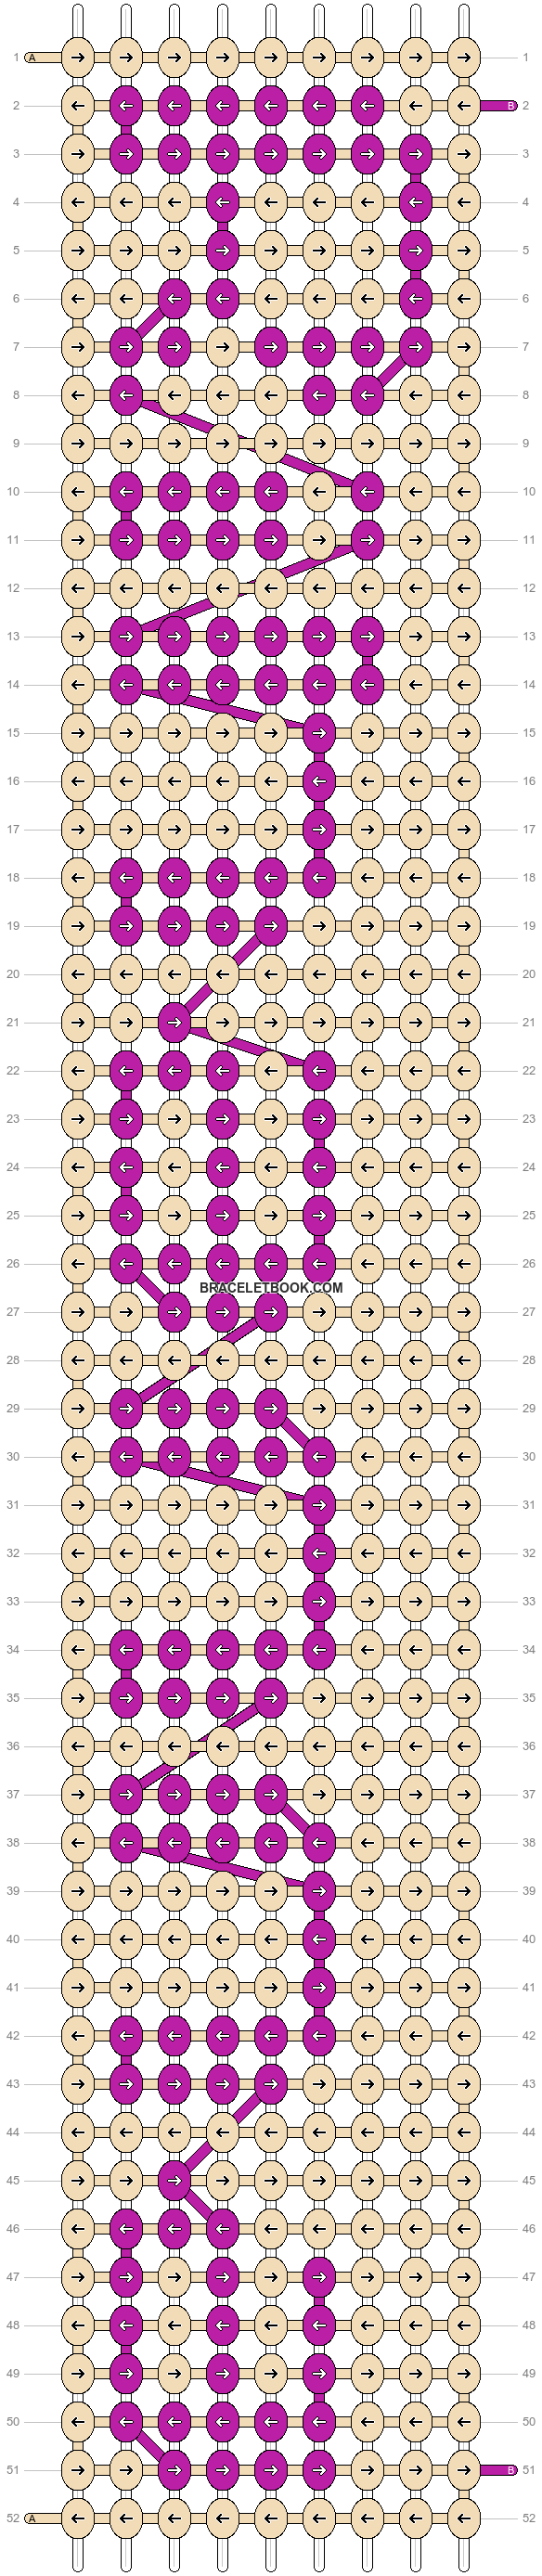 Alpha pattern #555 variation #154660 pattern